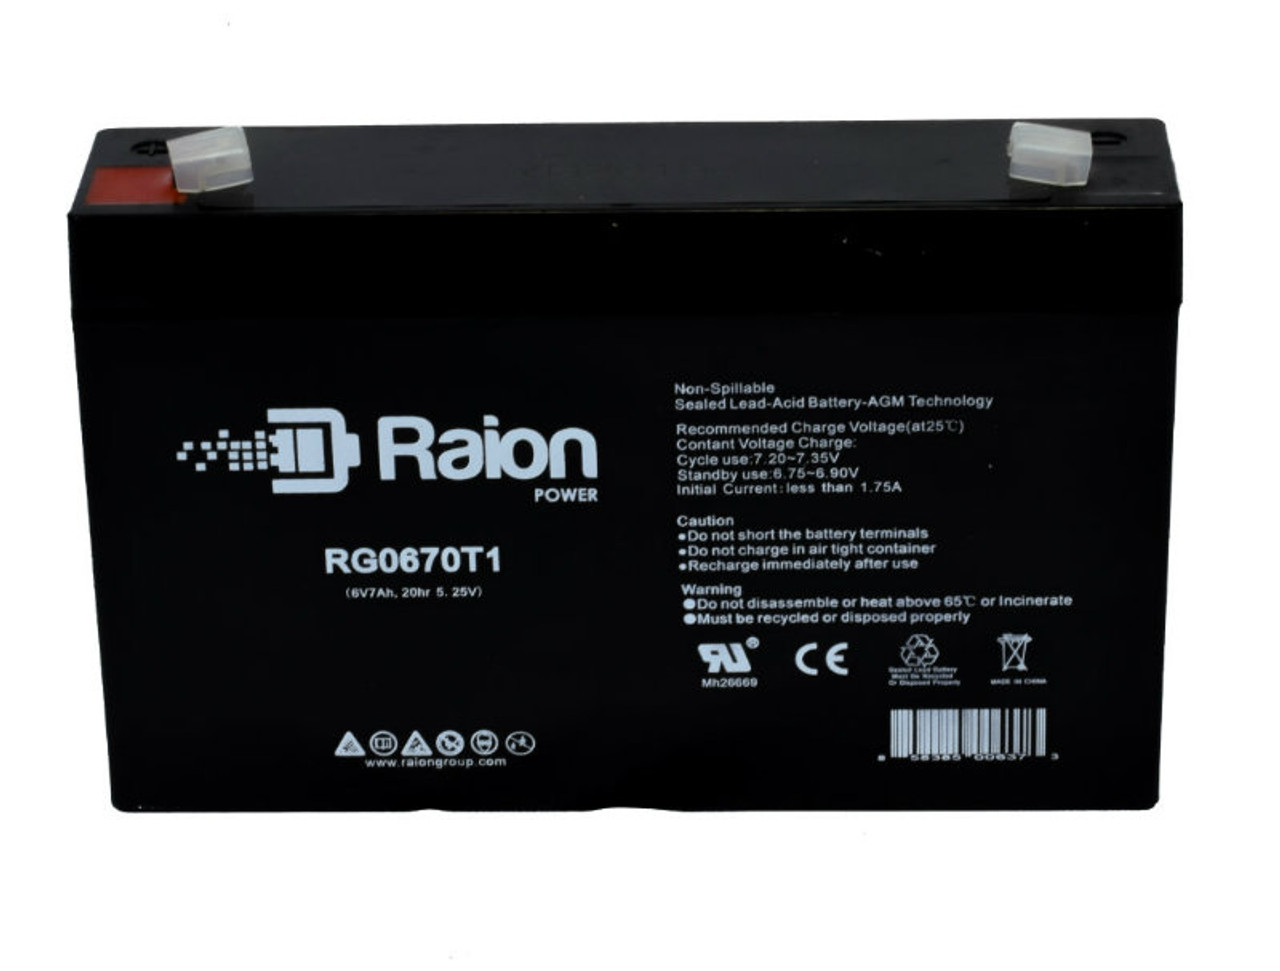 Raion Power RG0670T1 Replacement Battery Cartridge for Sonnenschein 719046500